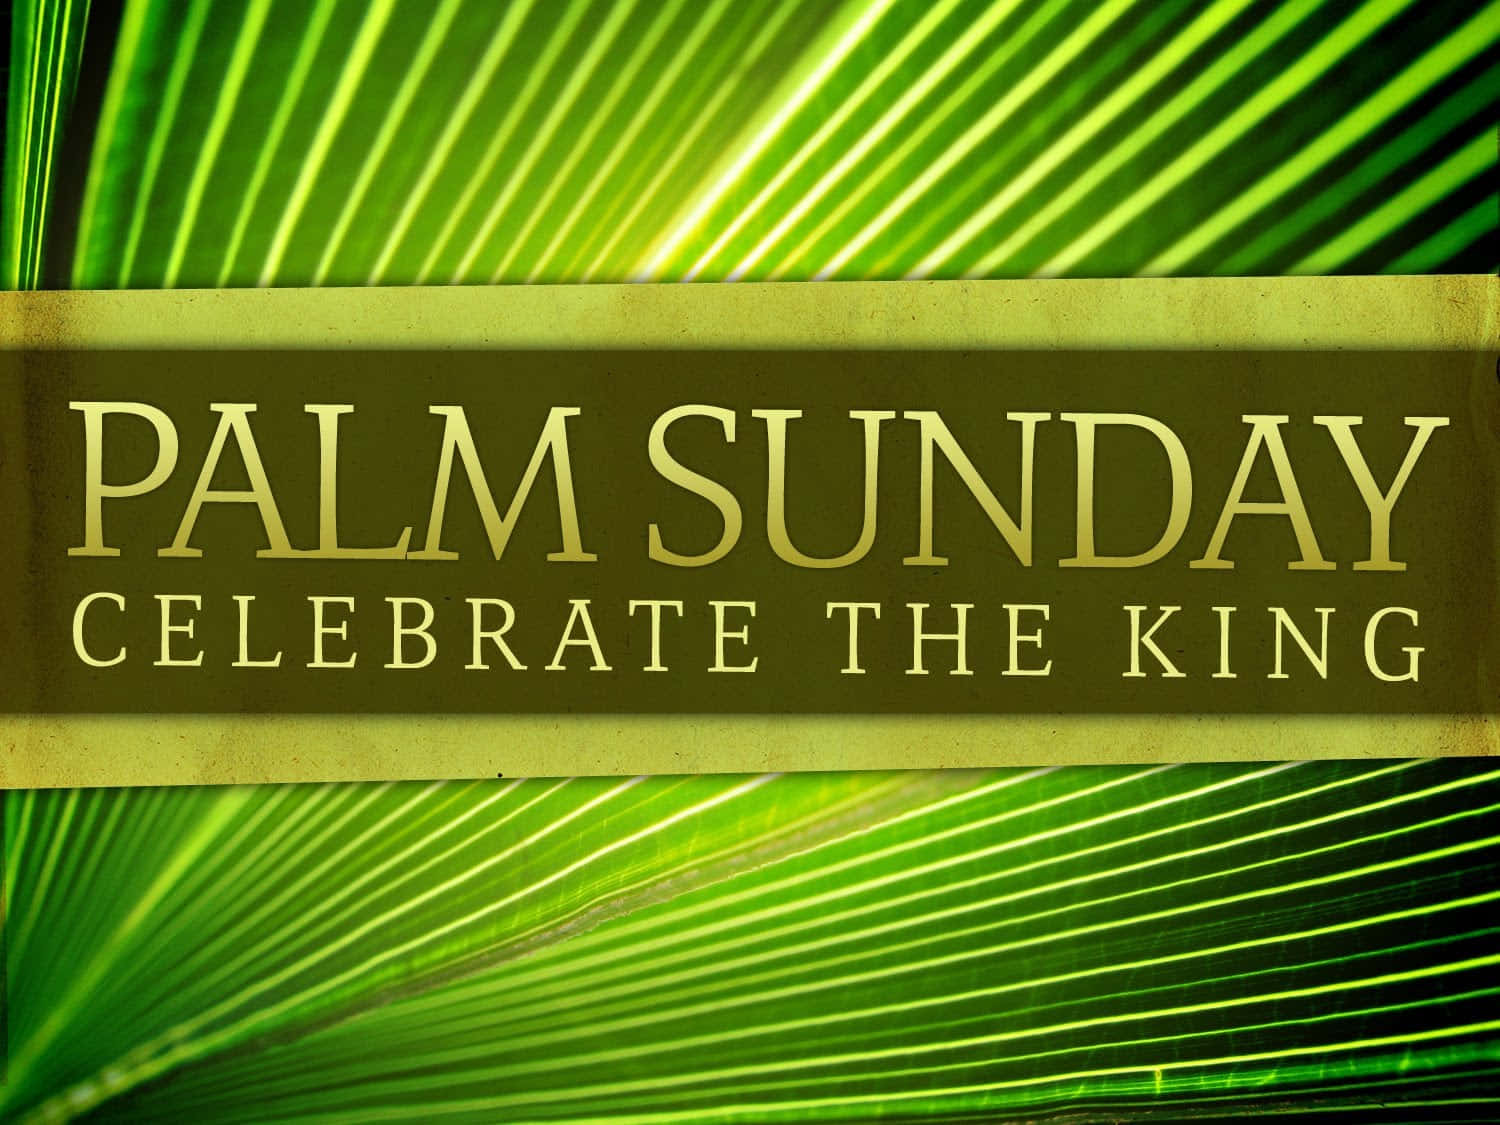 Palm Sunday Celebrate The King Text Background